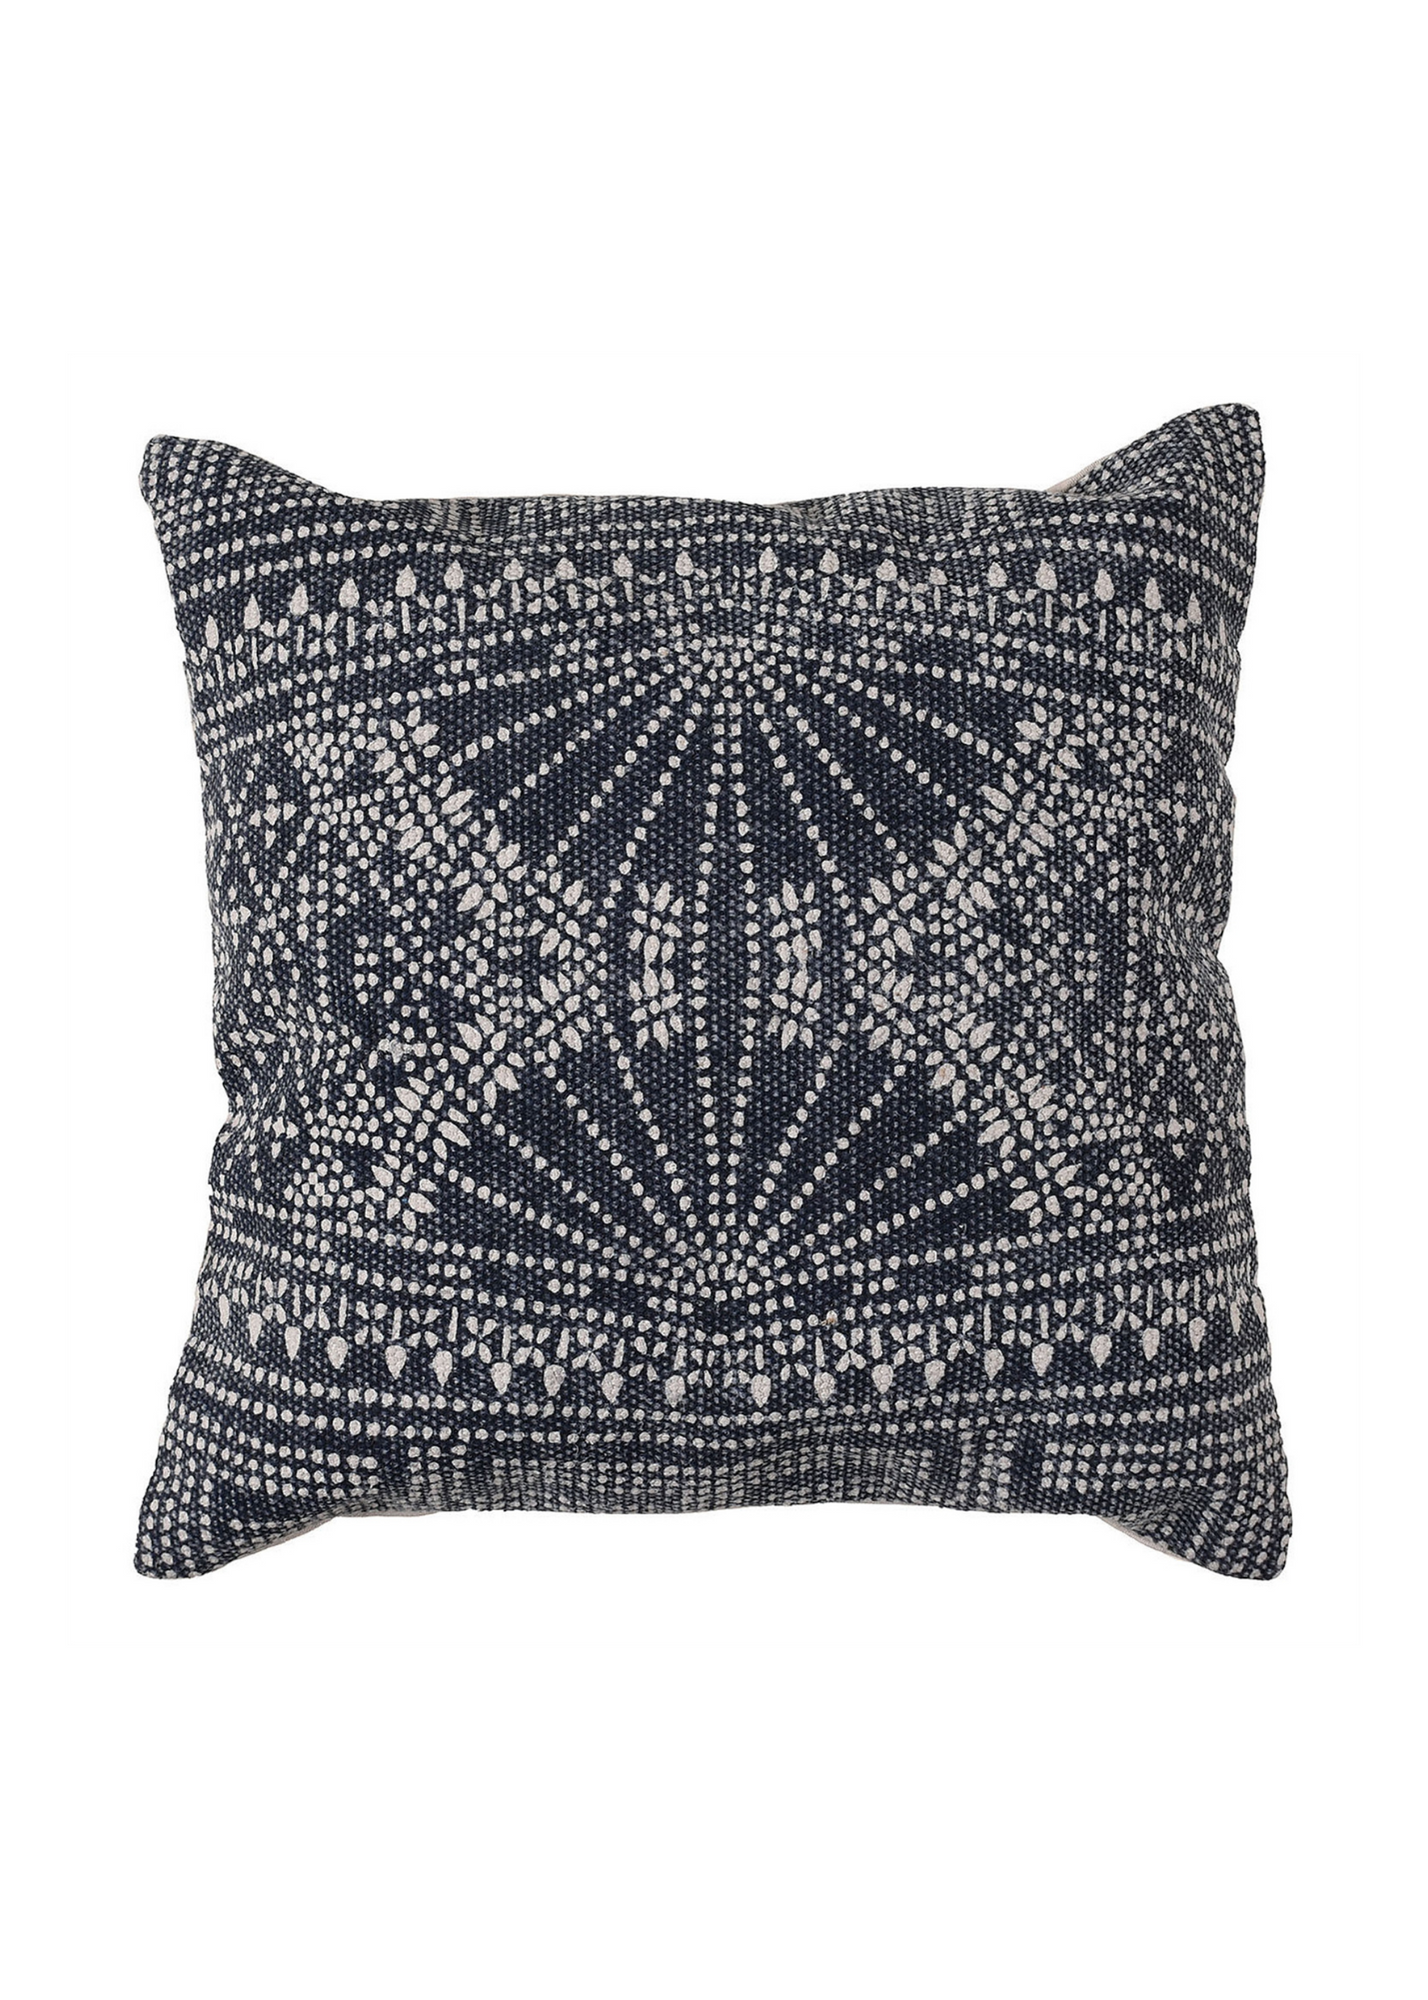 Indigo Batik Pillow